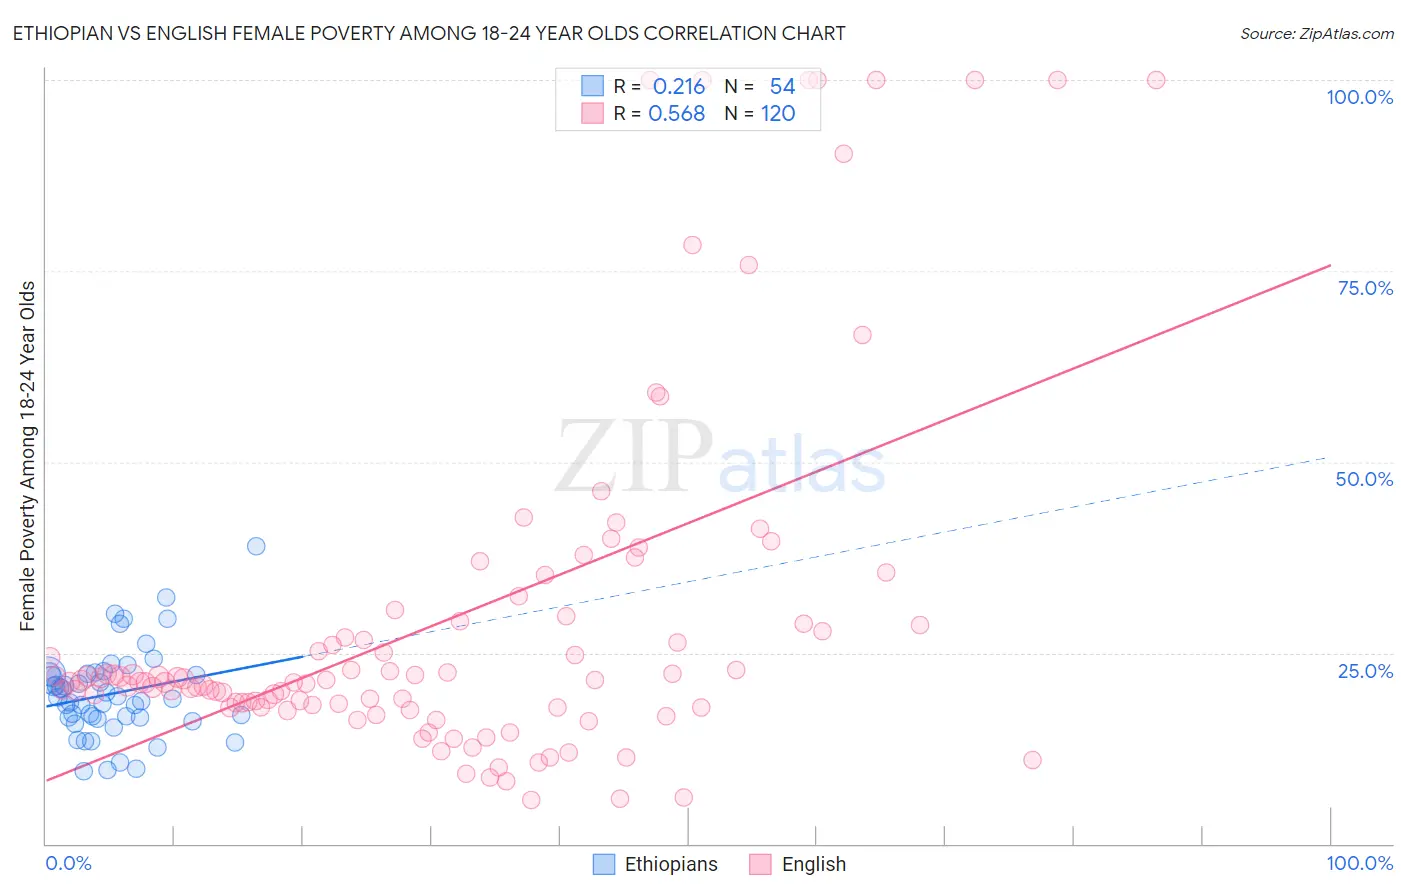 Ethiopian vs English Female Poverty Among 18-24 Year Olds